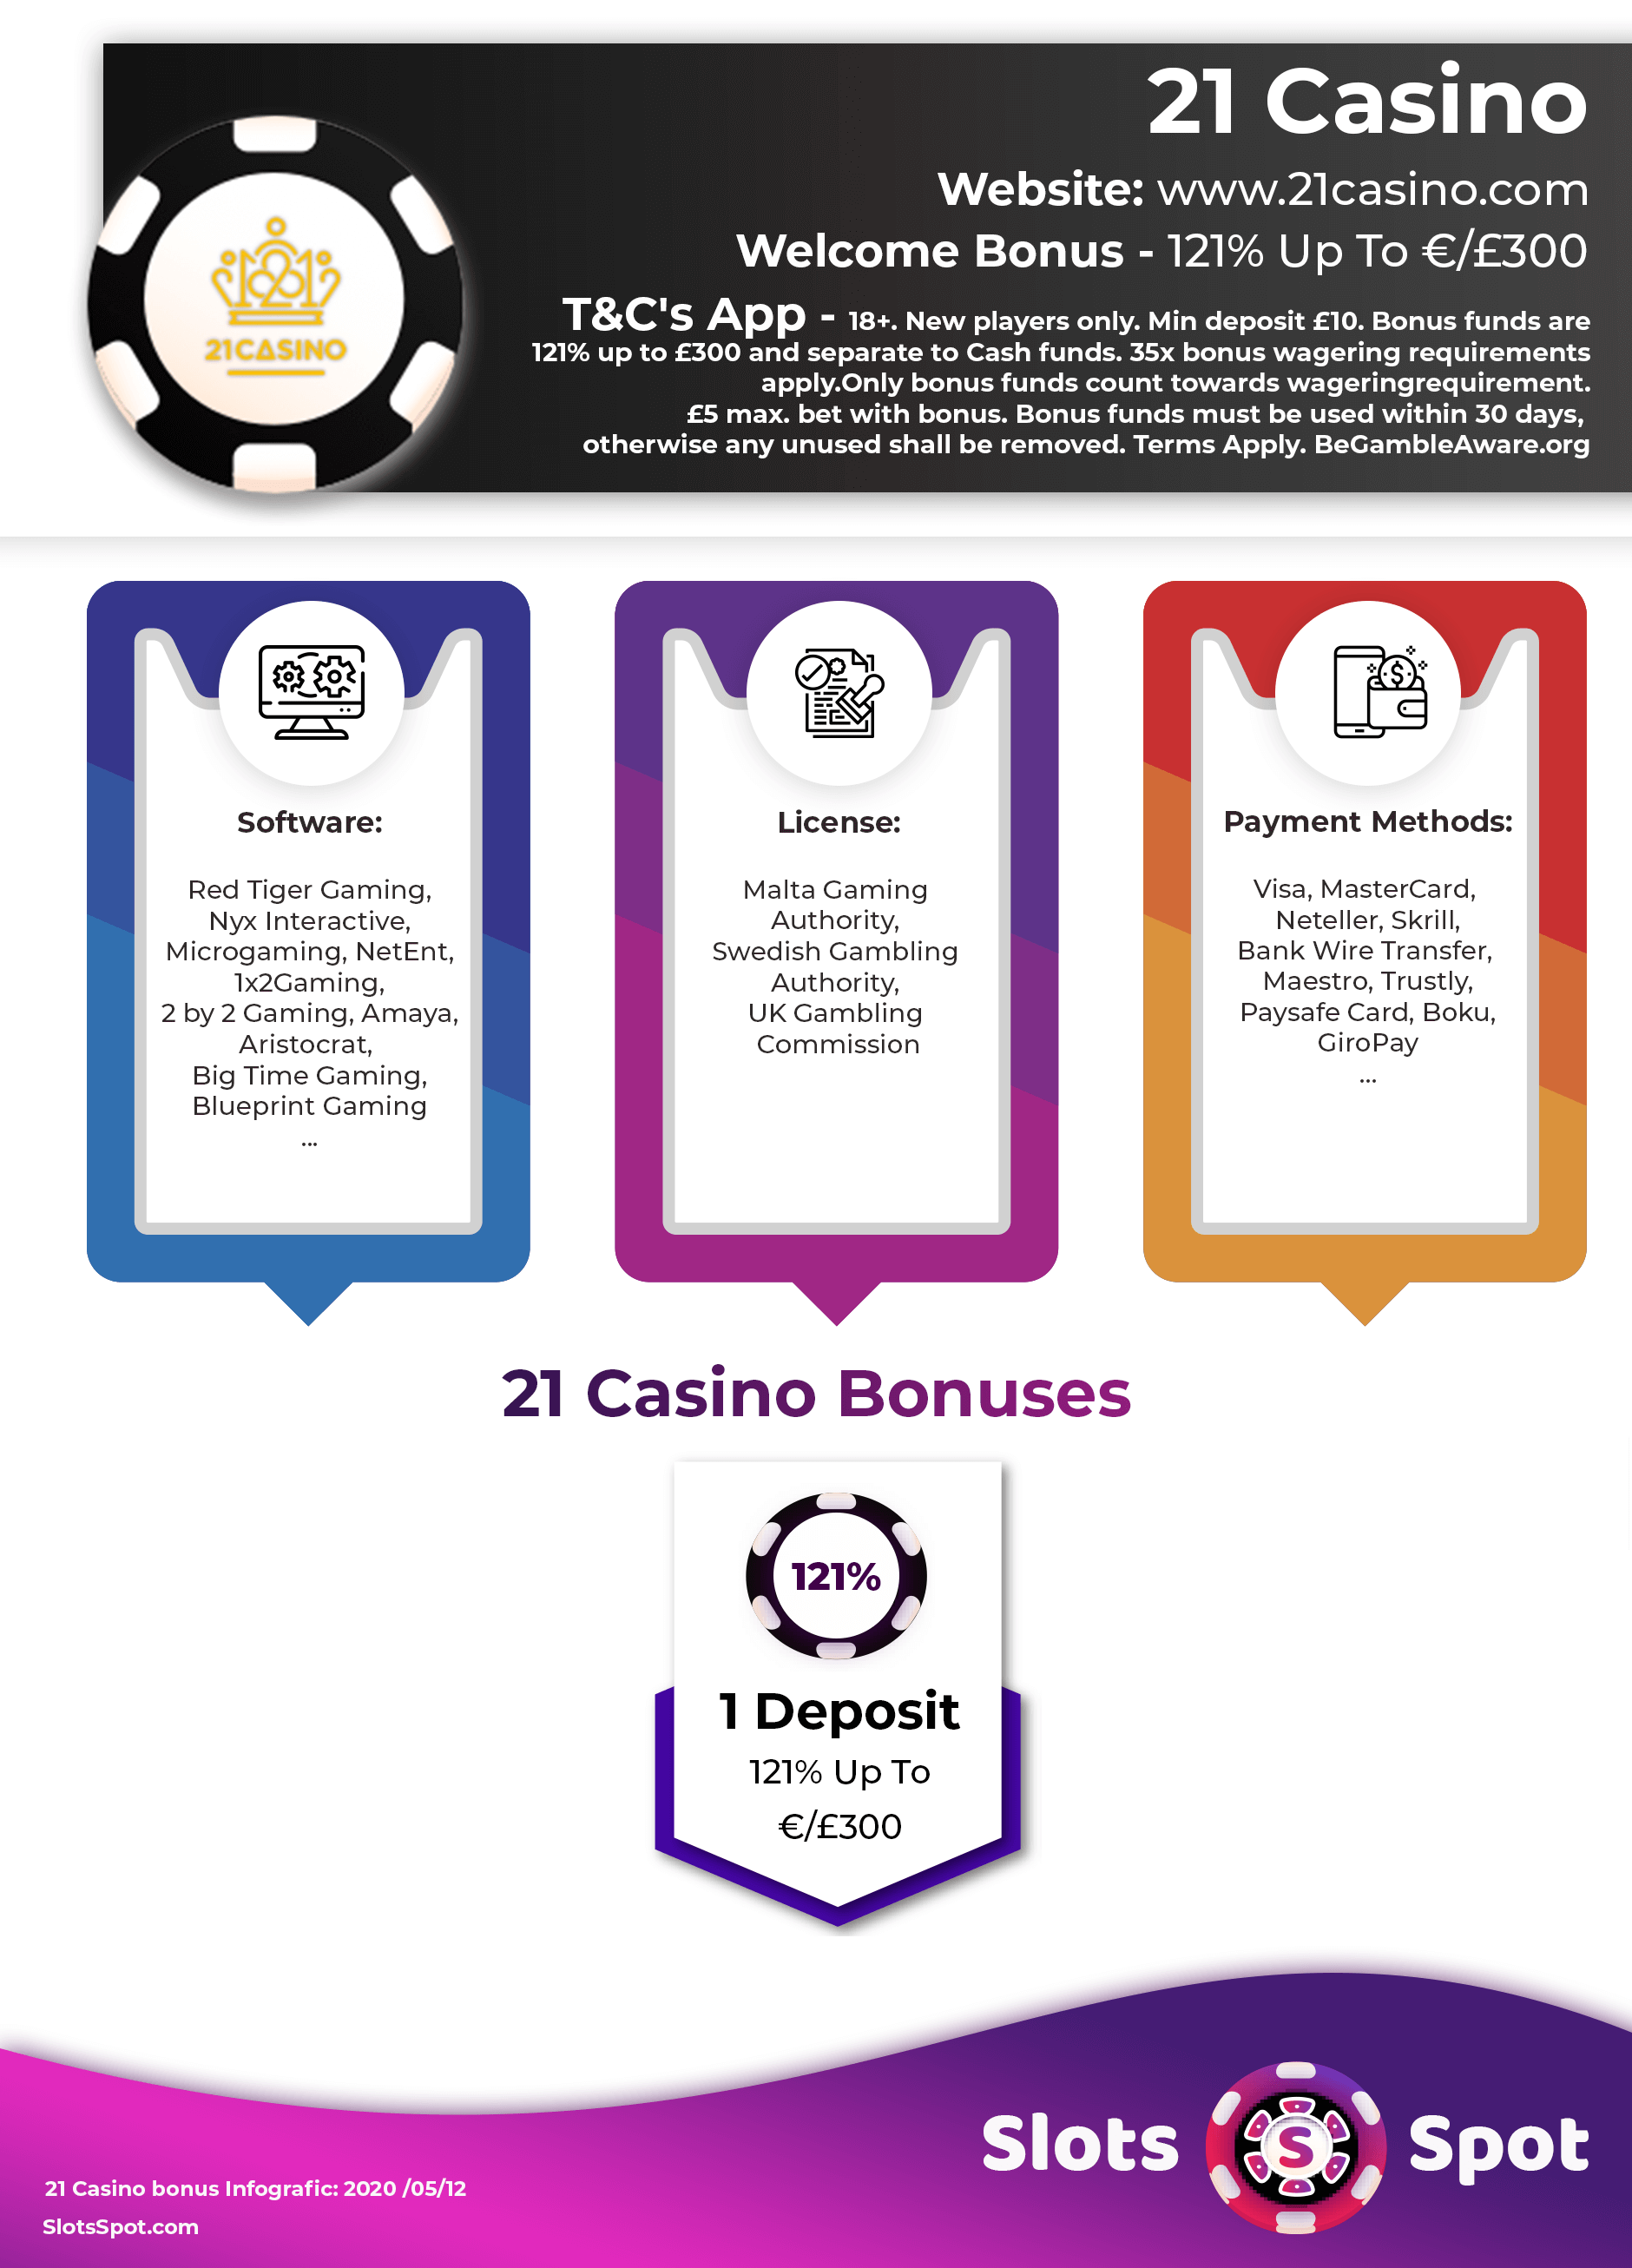 roaring 21.casino no deposit bonuses